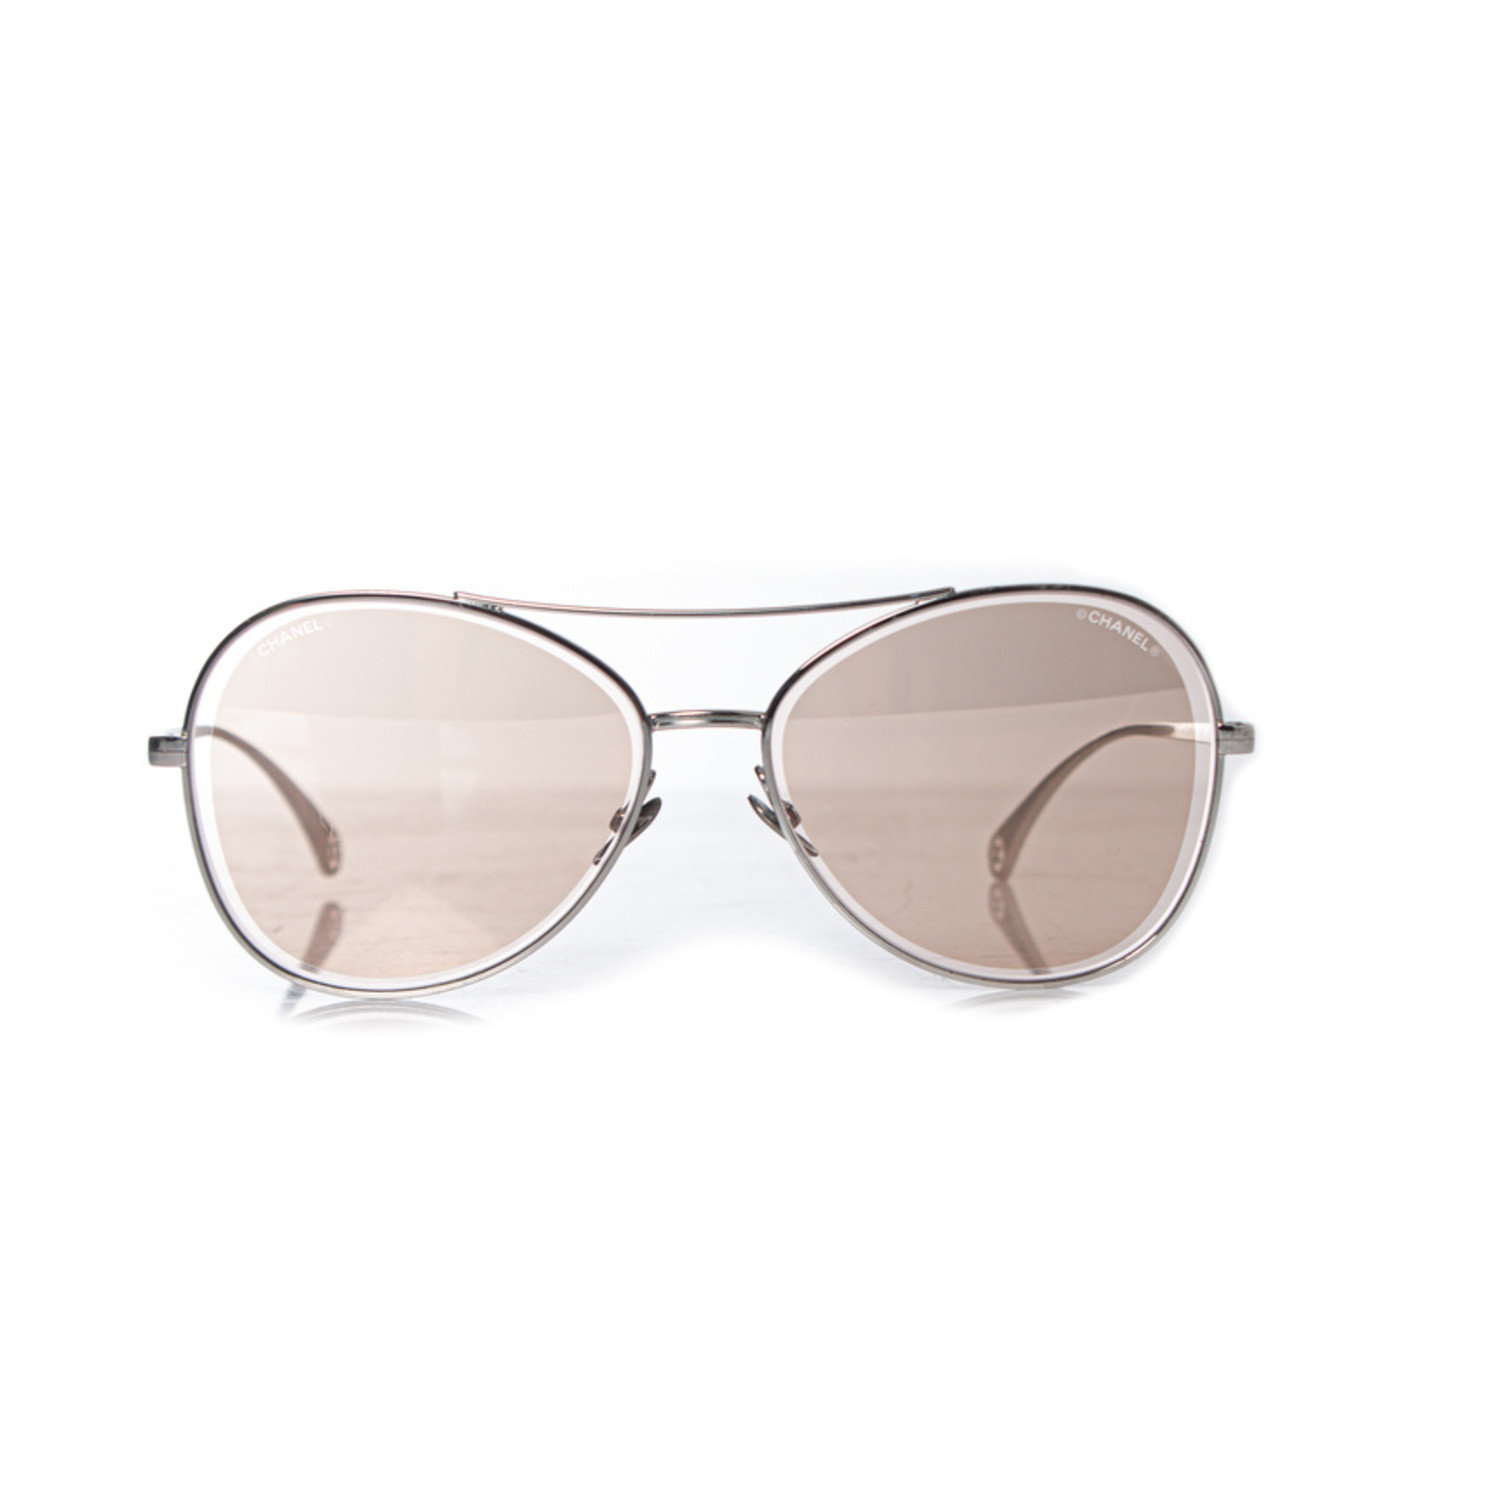 Chanel, Pilot sunglasses with metal silver frame - Unique Designer Pieces